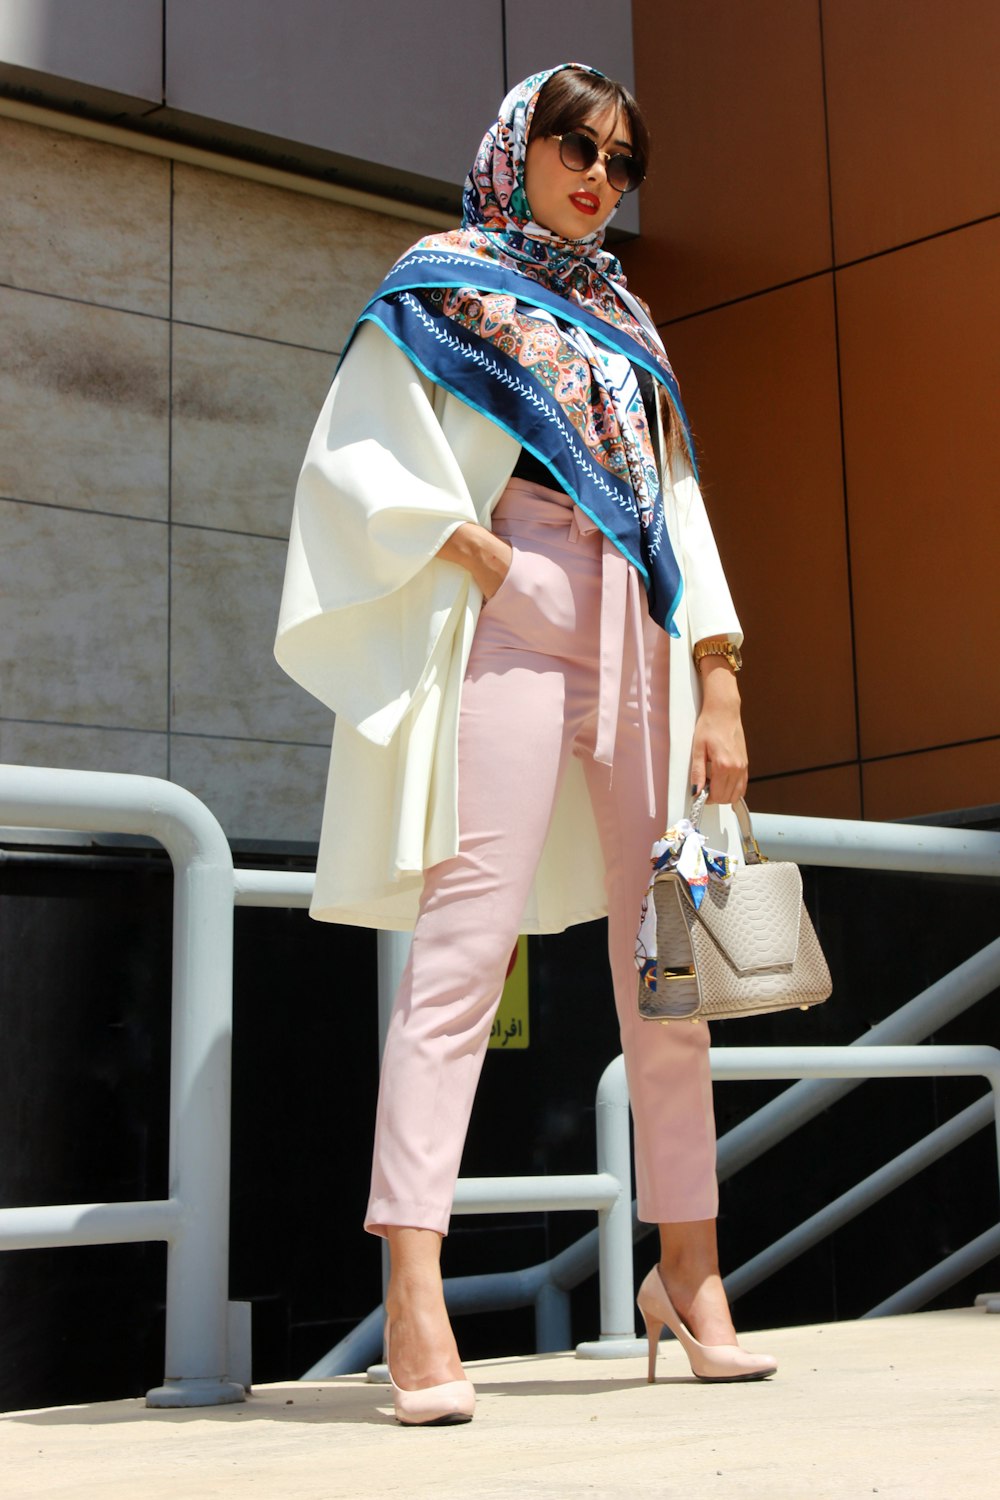 woman wearing pink pants holding grey leather handbag